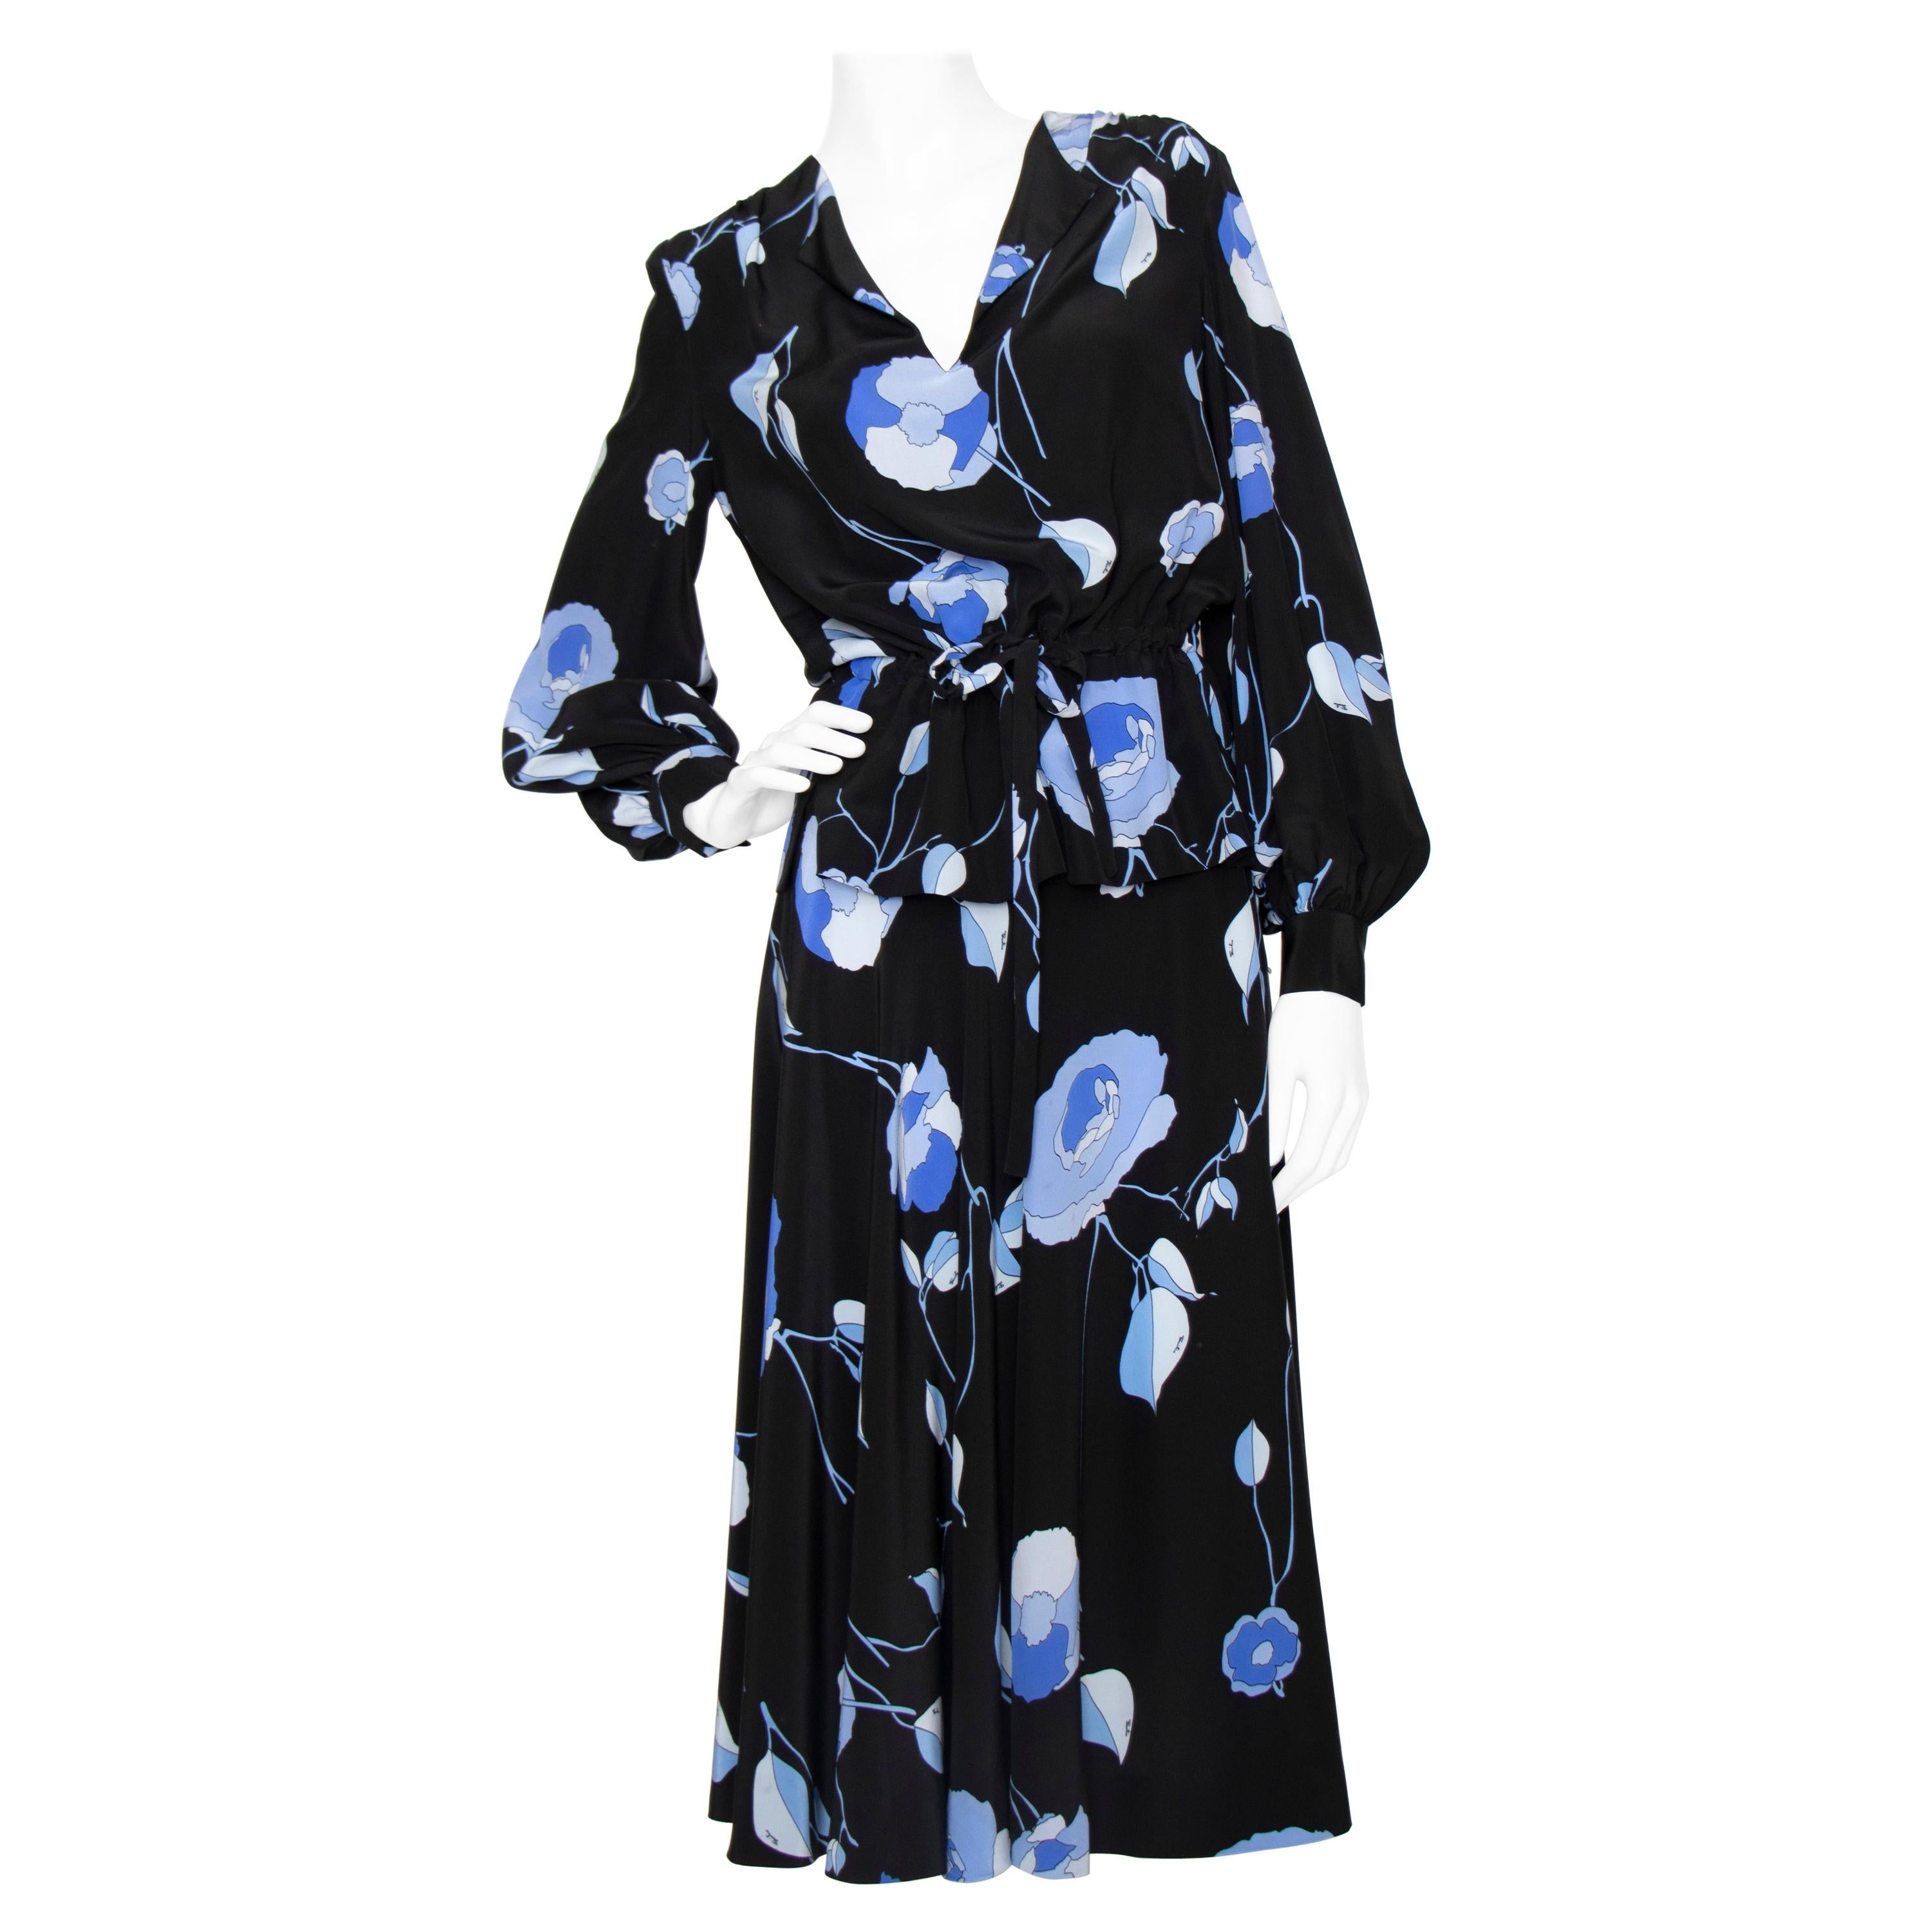 A 1970s Vintage Emilio Pucci Two-Piece Floral Silk Dress For Sale at ...